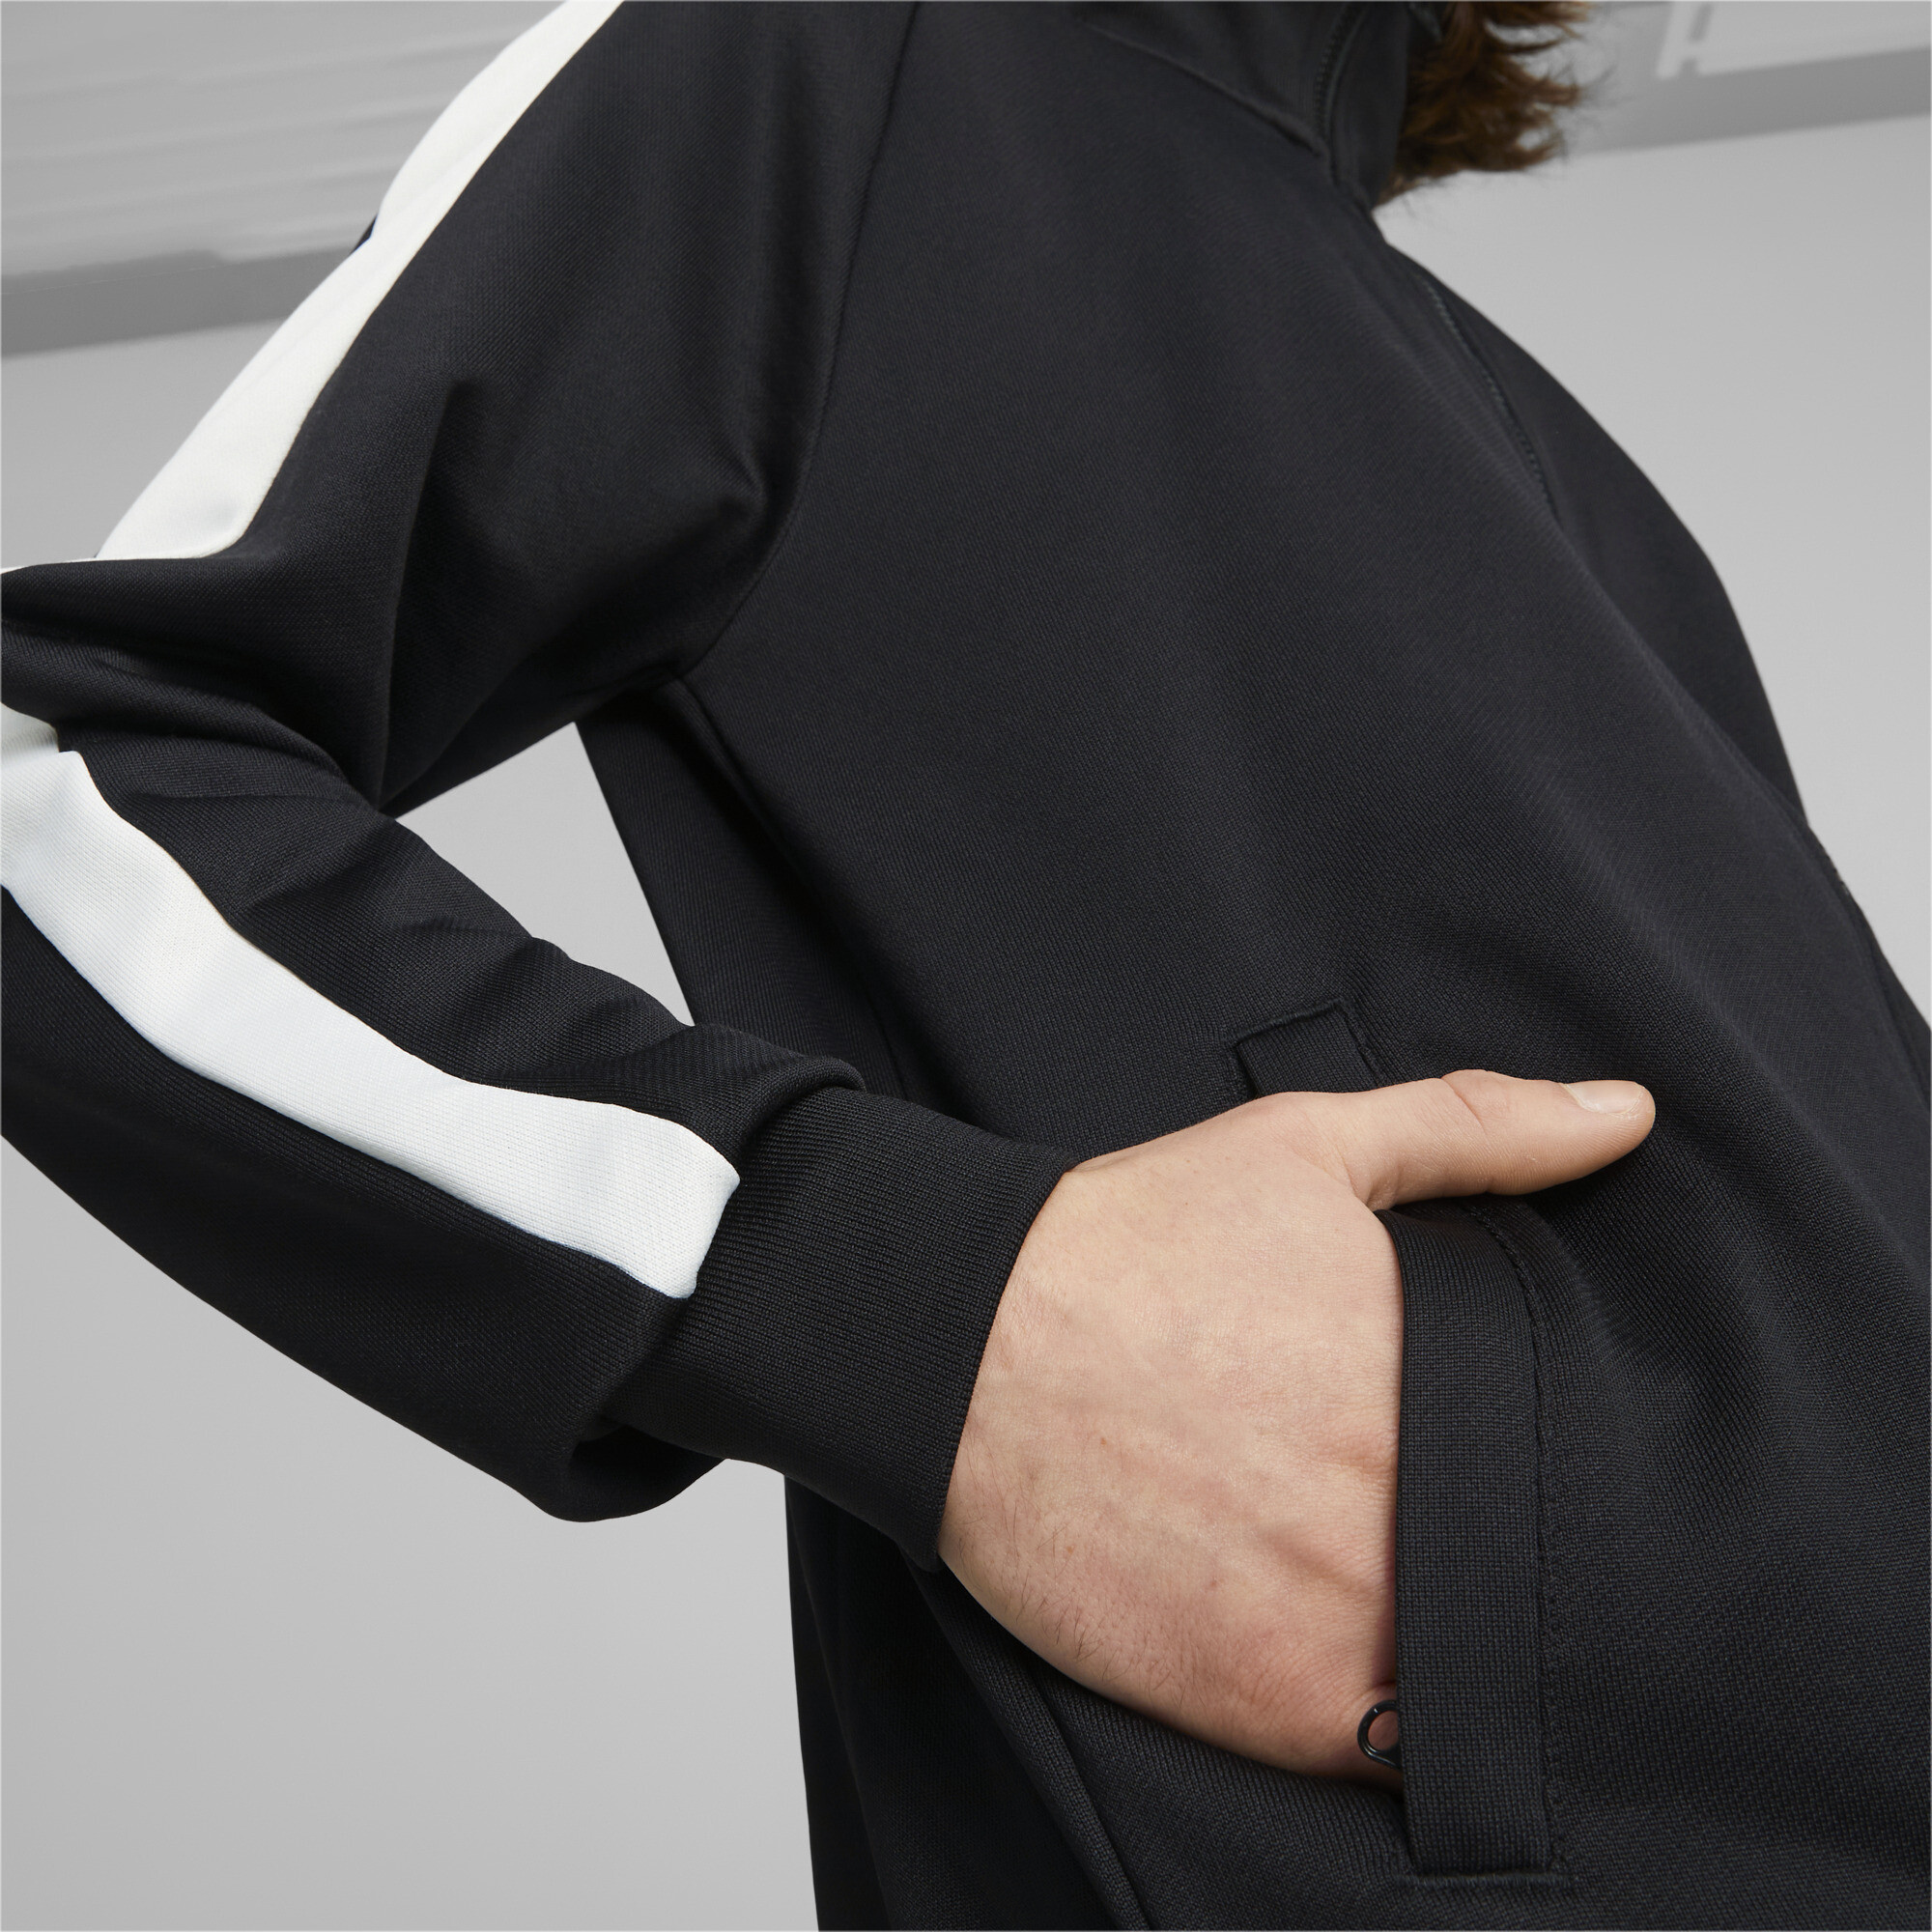 Men's PUMA Iconic T7 Track Jacket In Black, Size Medium